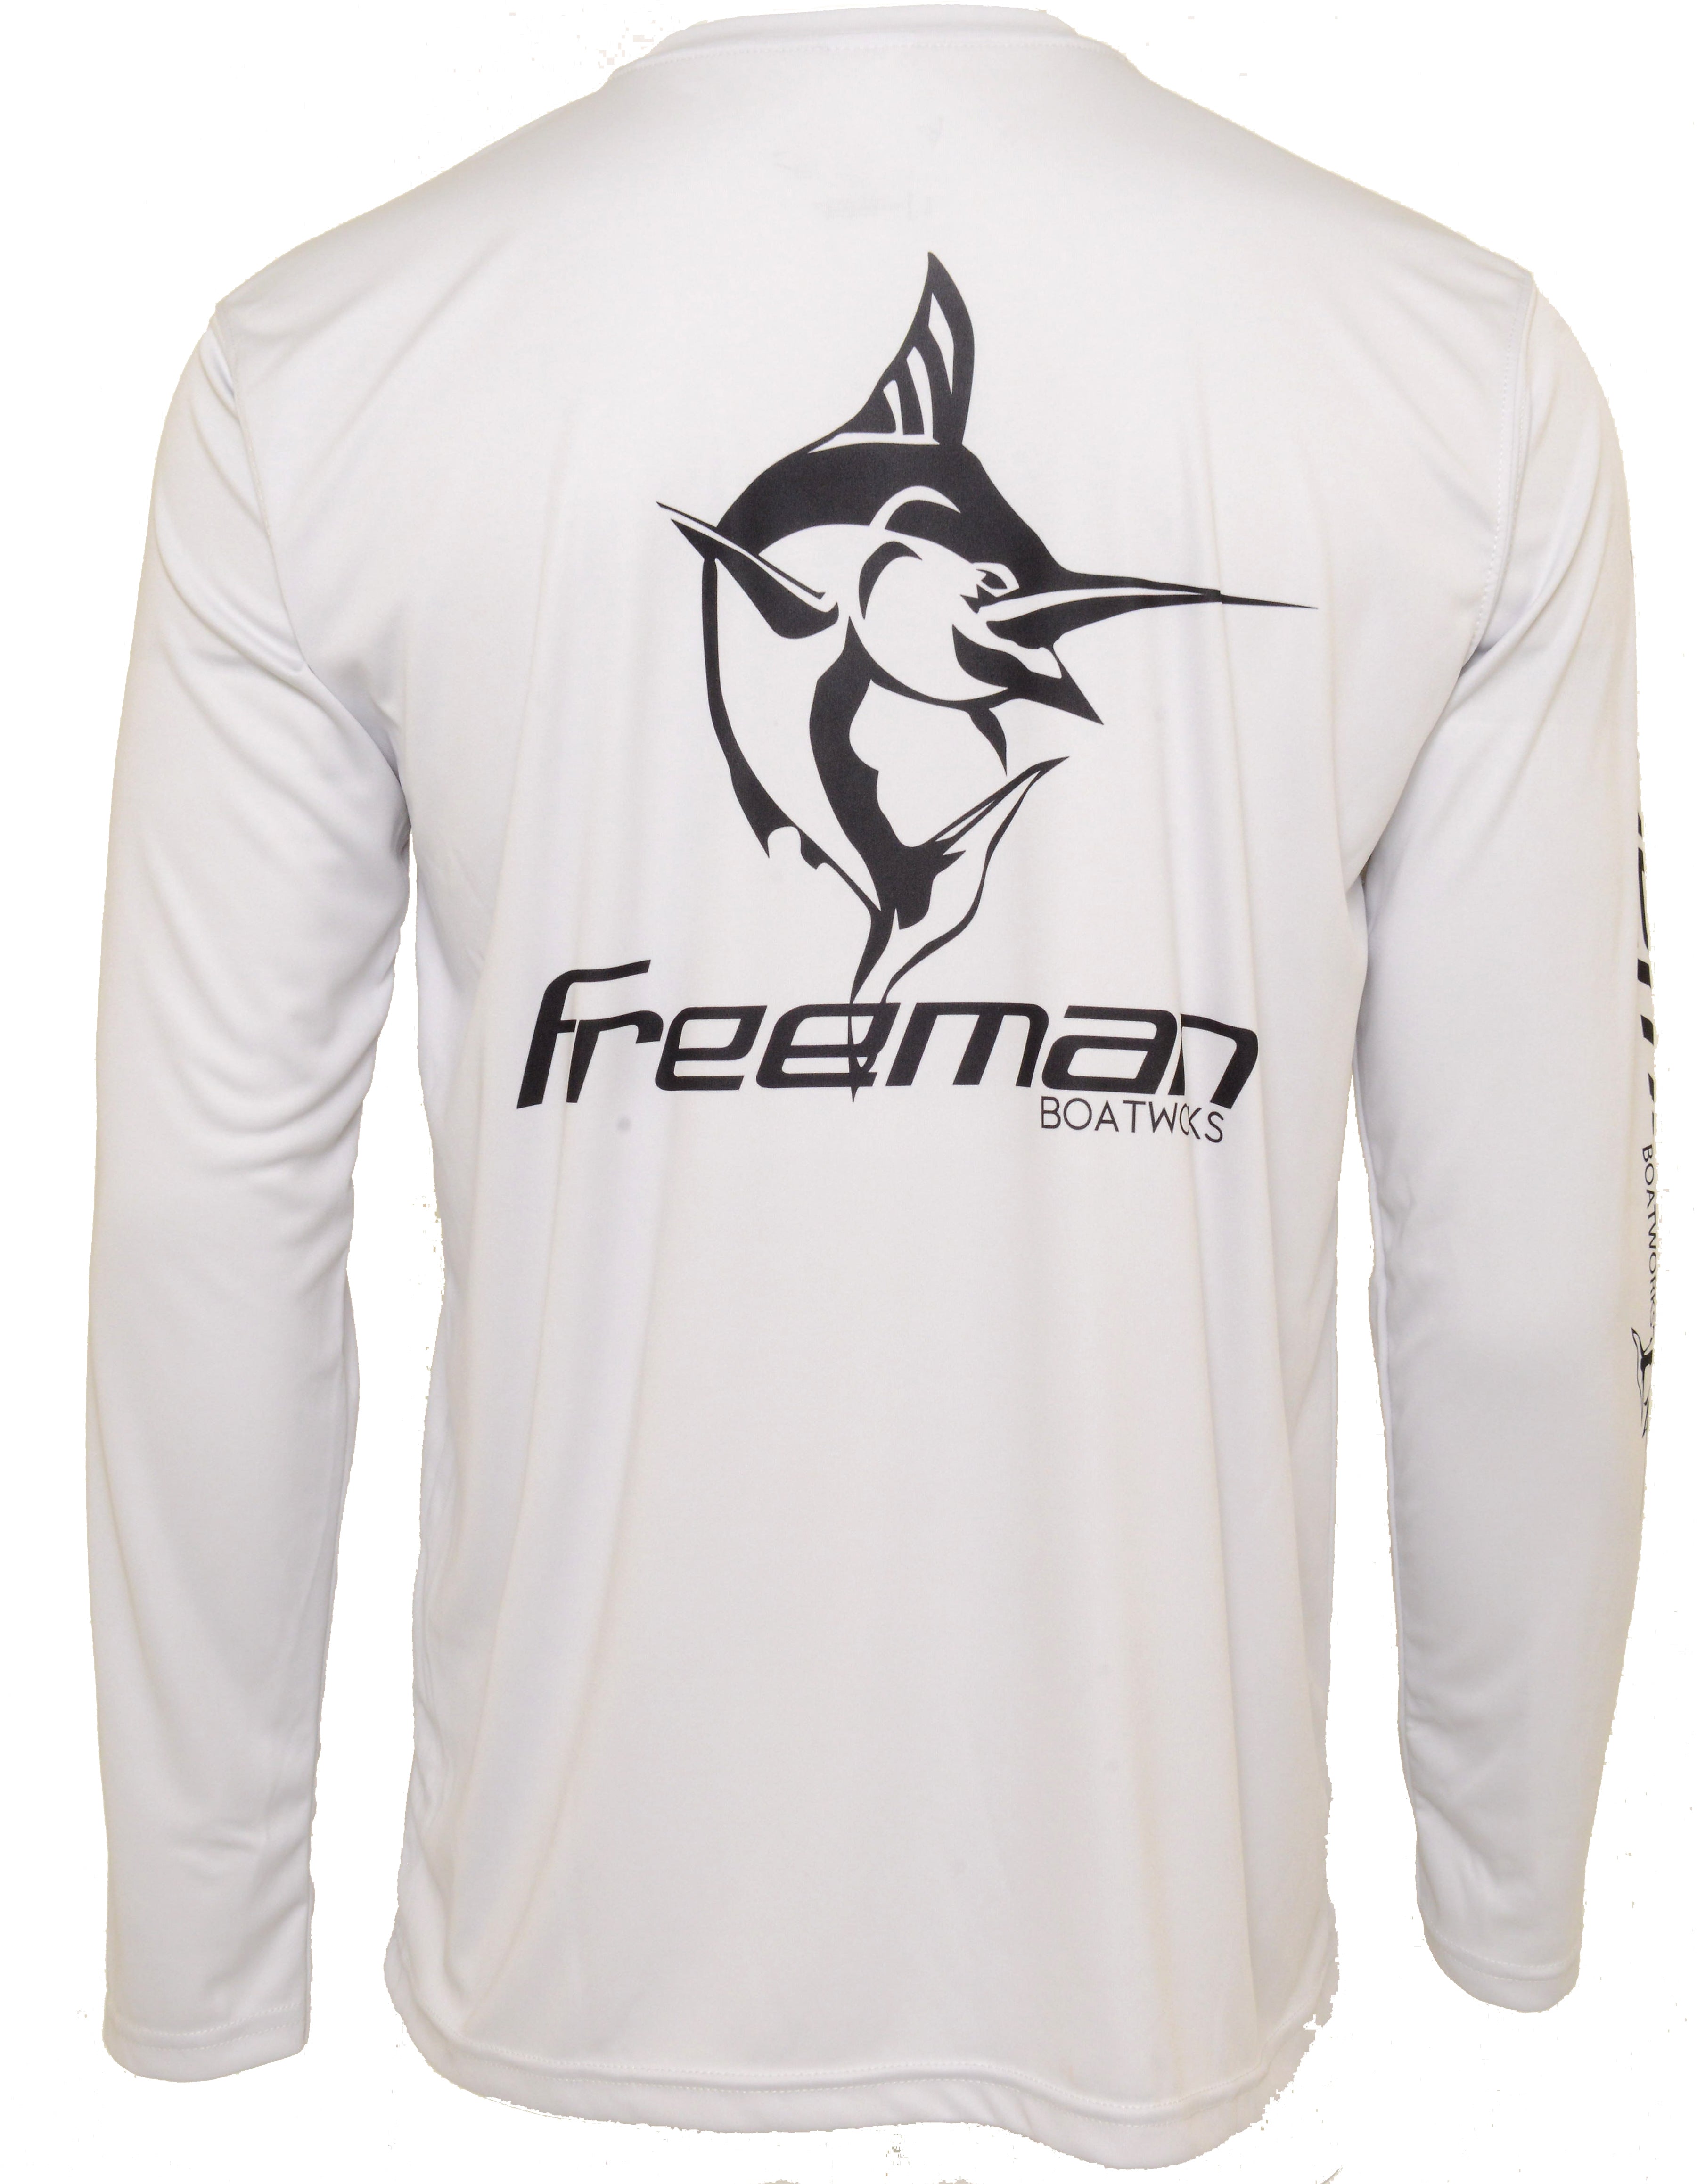 Freeman Boatworks Performance Shirt